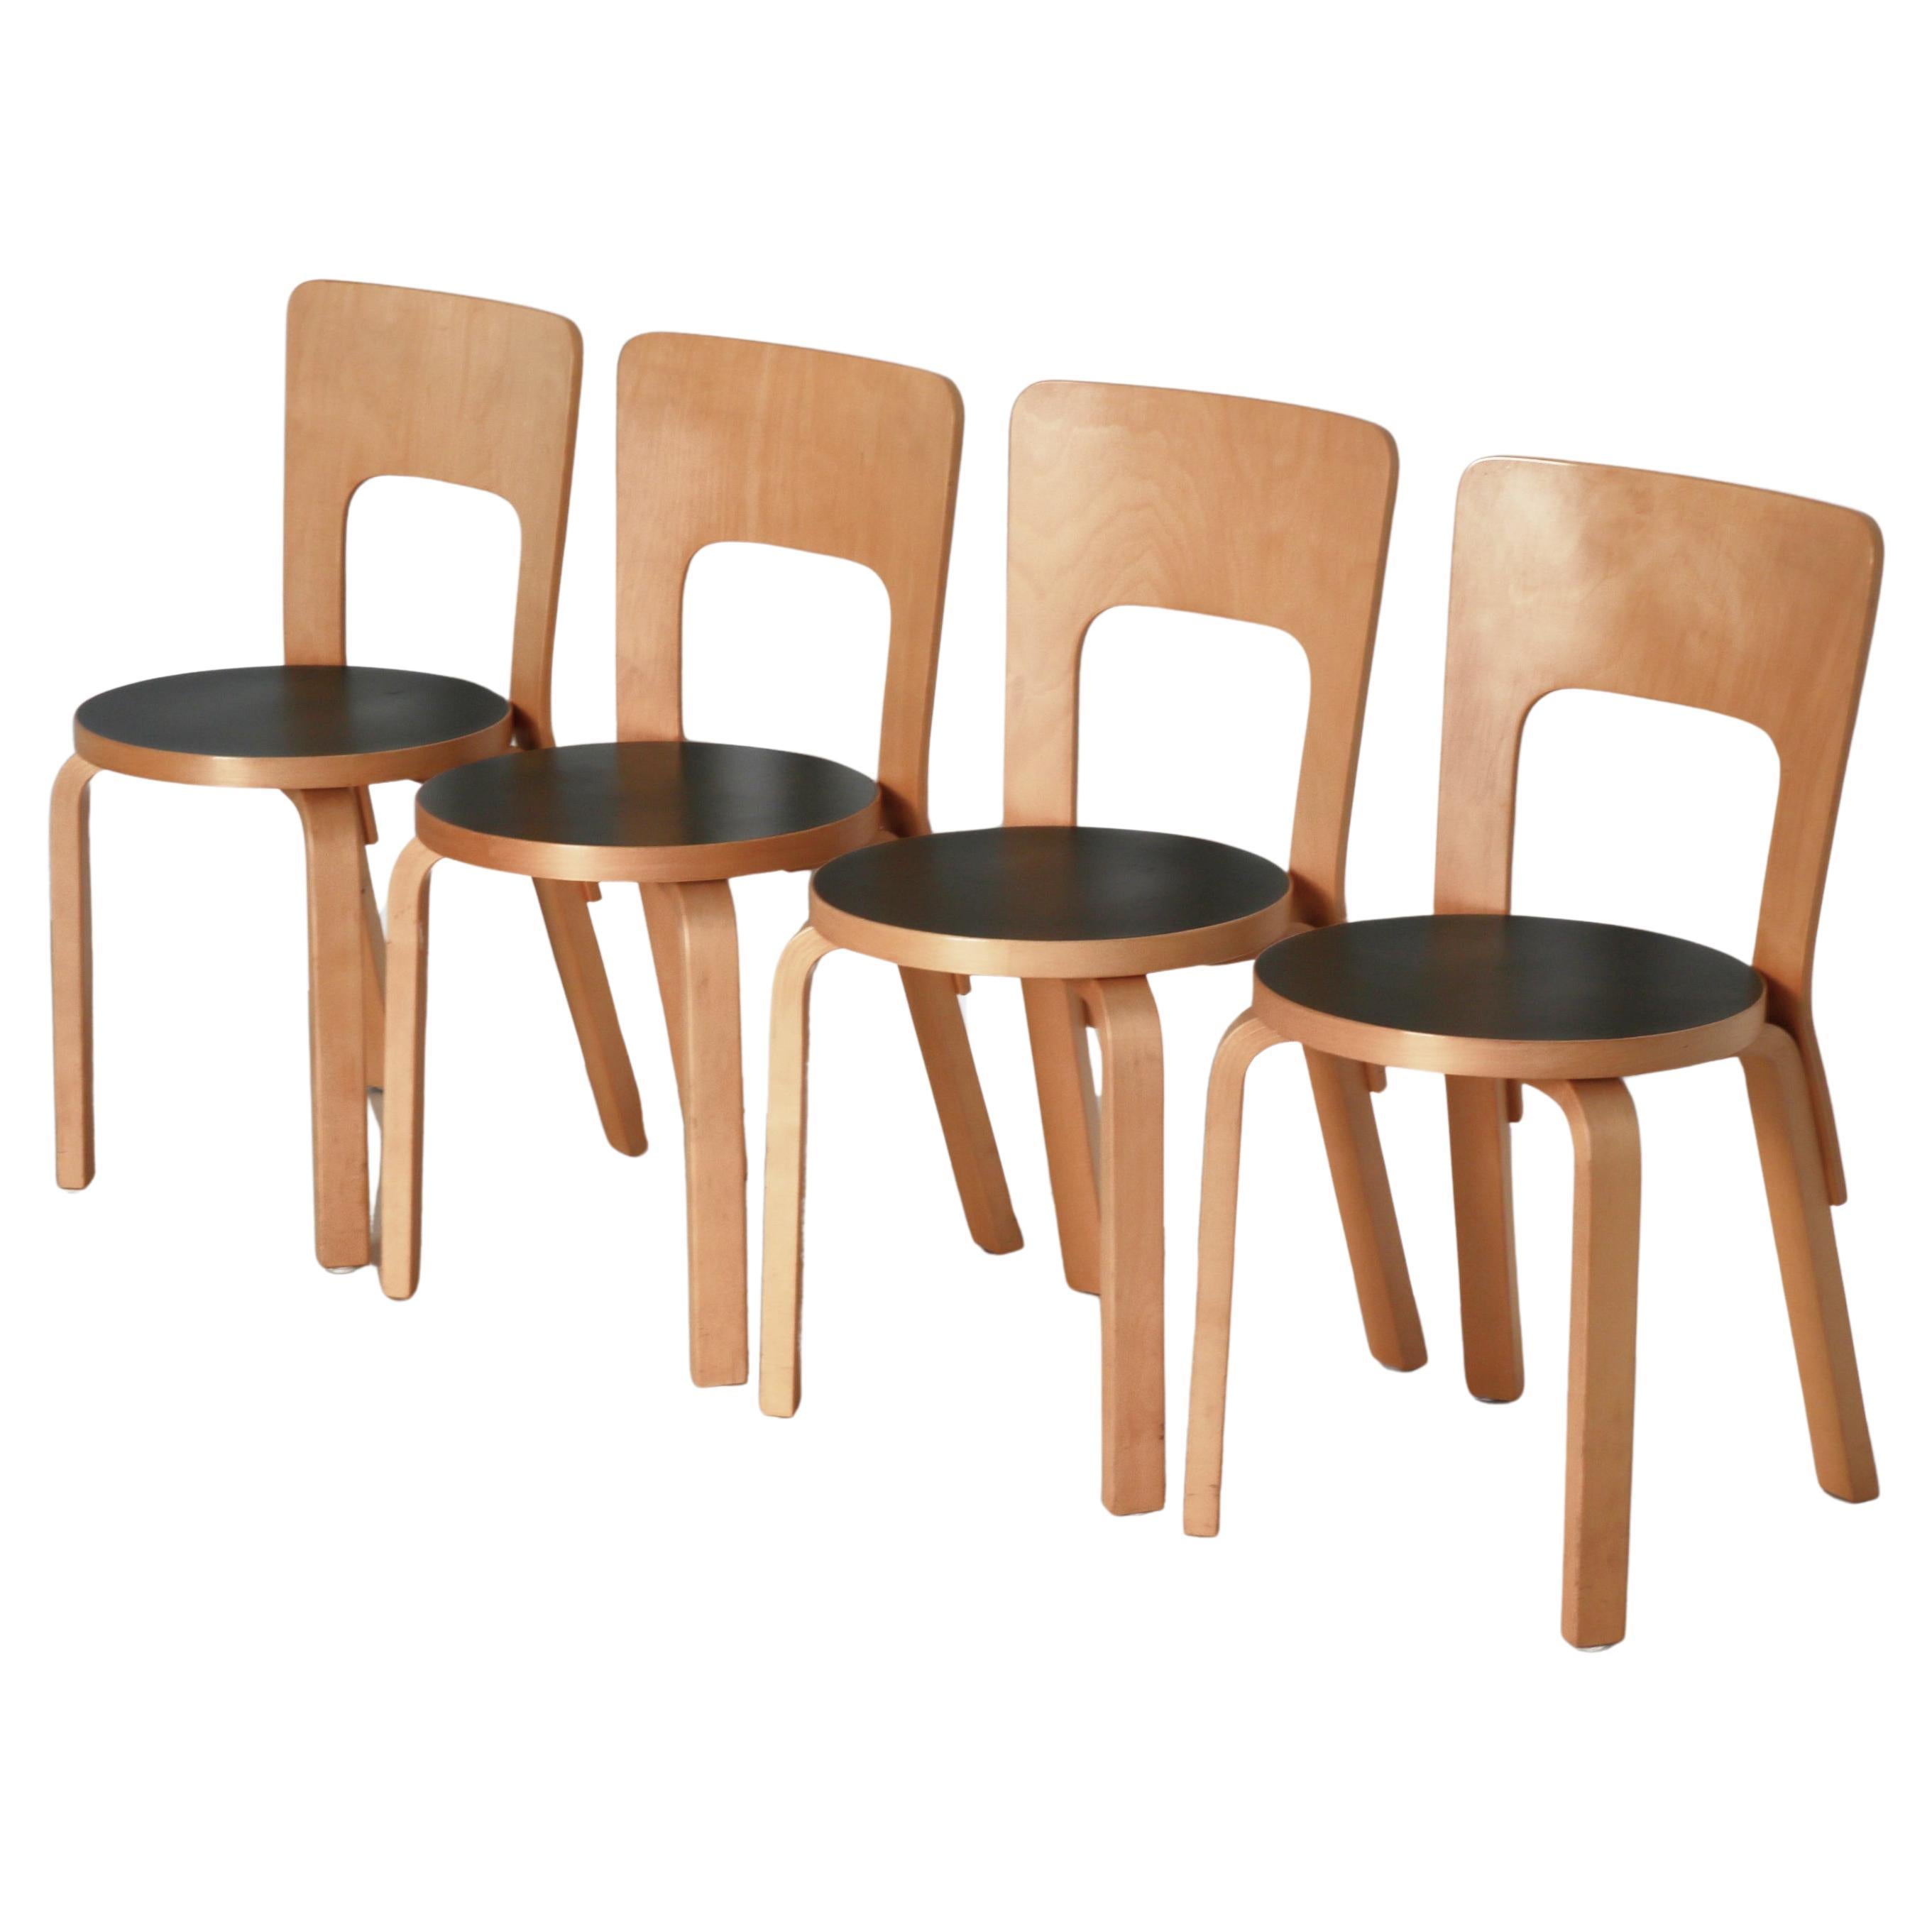 Set of 4 Vintage Alvar Aalto Model 66 Chairs by Artek in Laminated Birch, 1960s For Sale